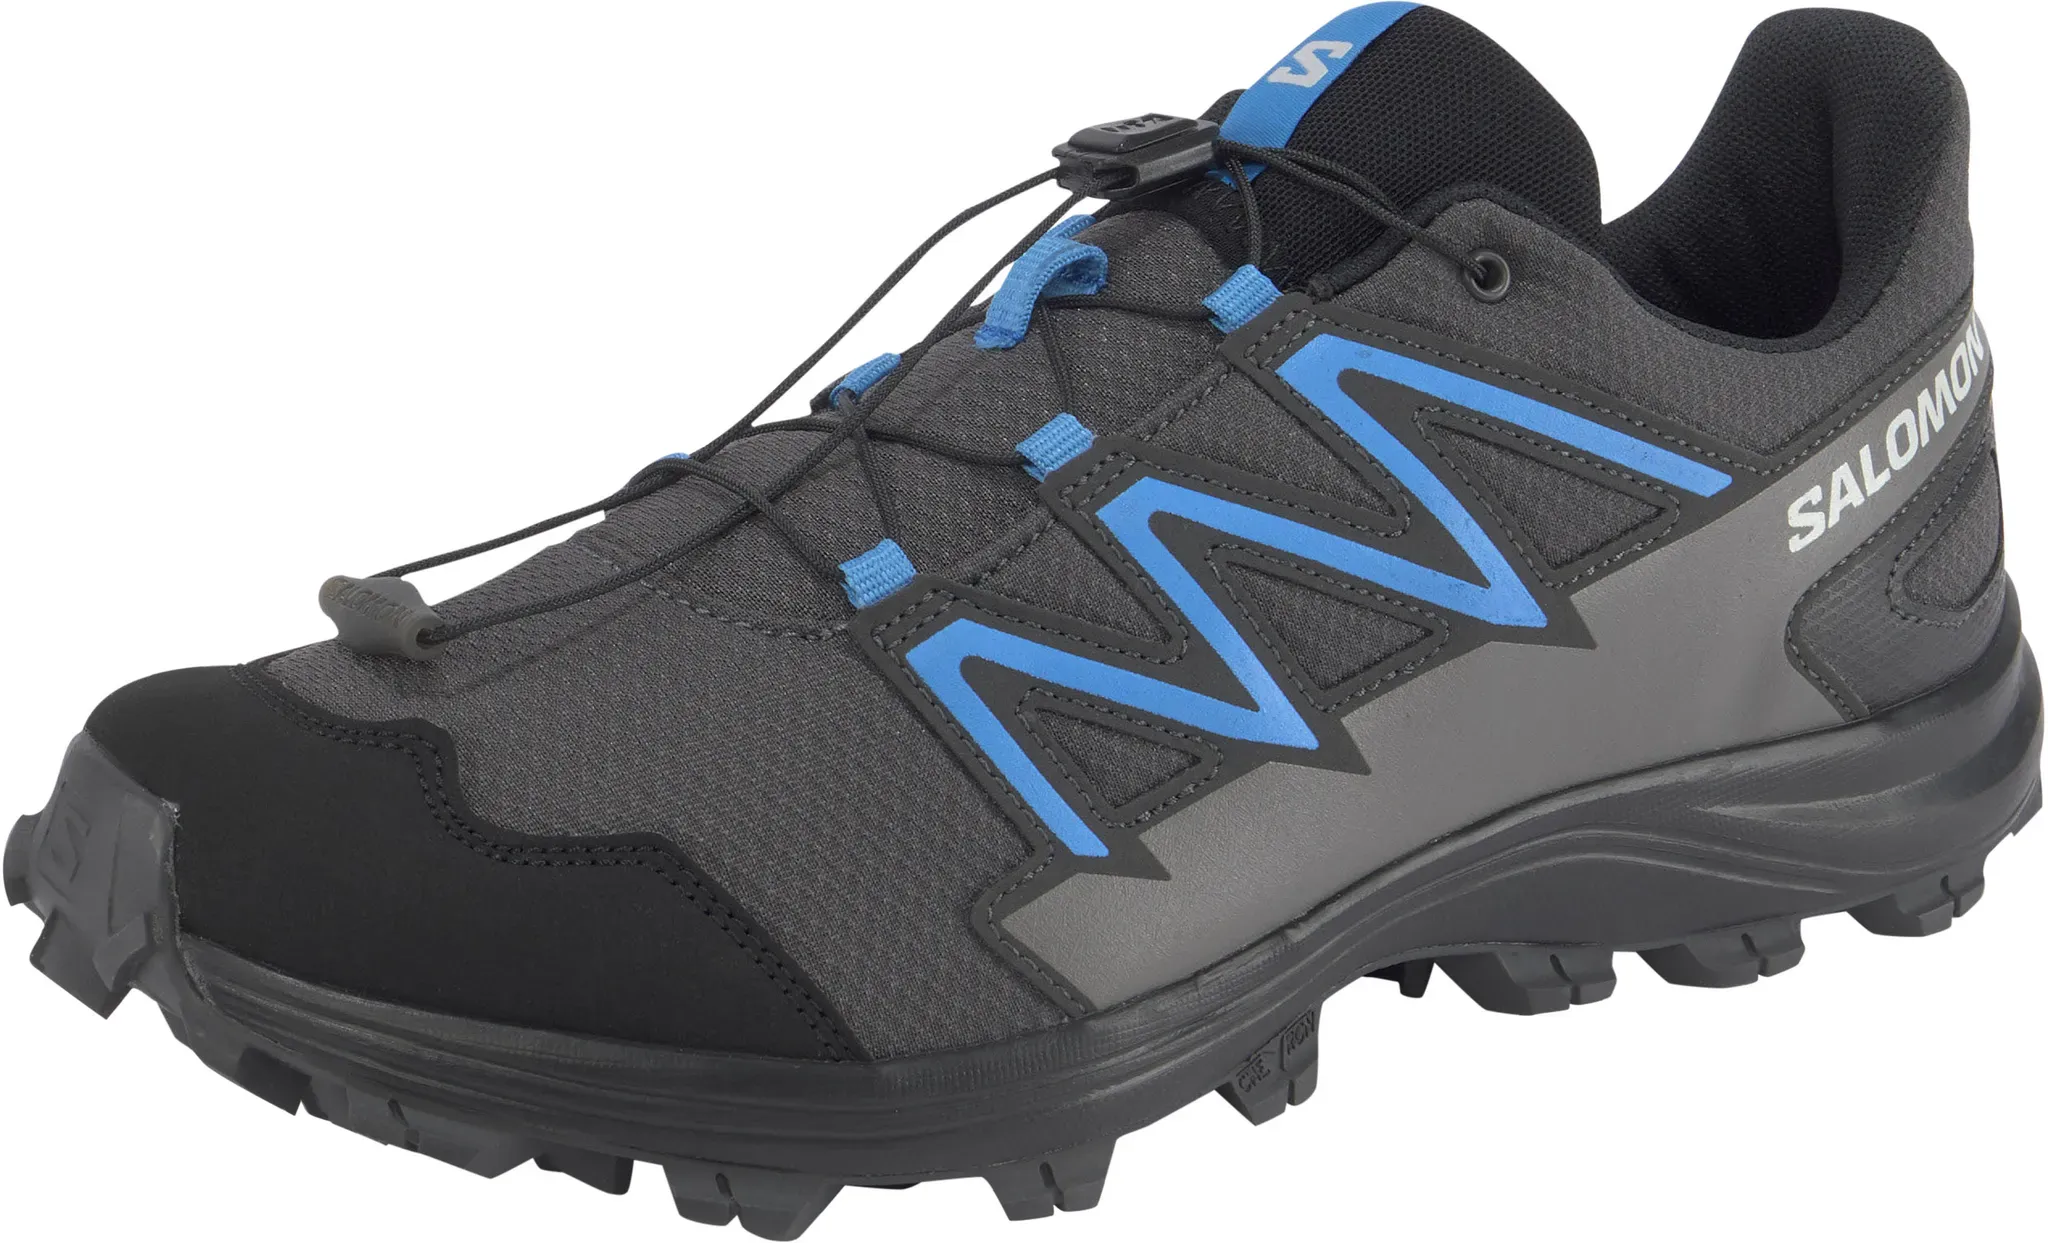 Wanderschuh SALOMON "WATTARA M" Gr. 43, grau (grau, blau) Schuhe Herren